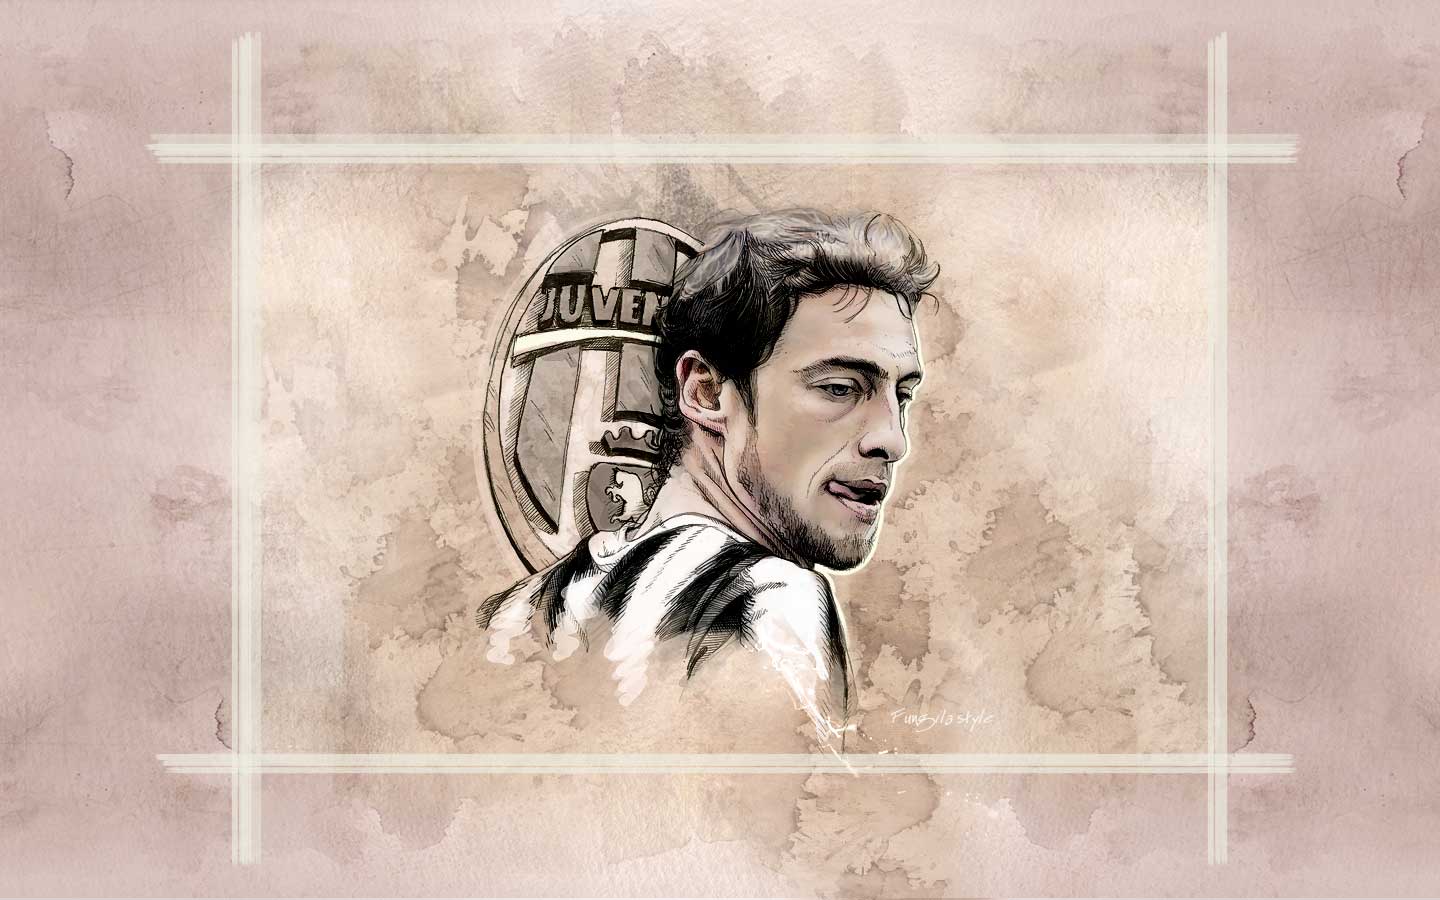 Claudio Marchisio Football Wallpaper